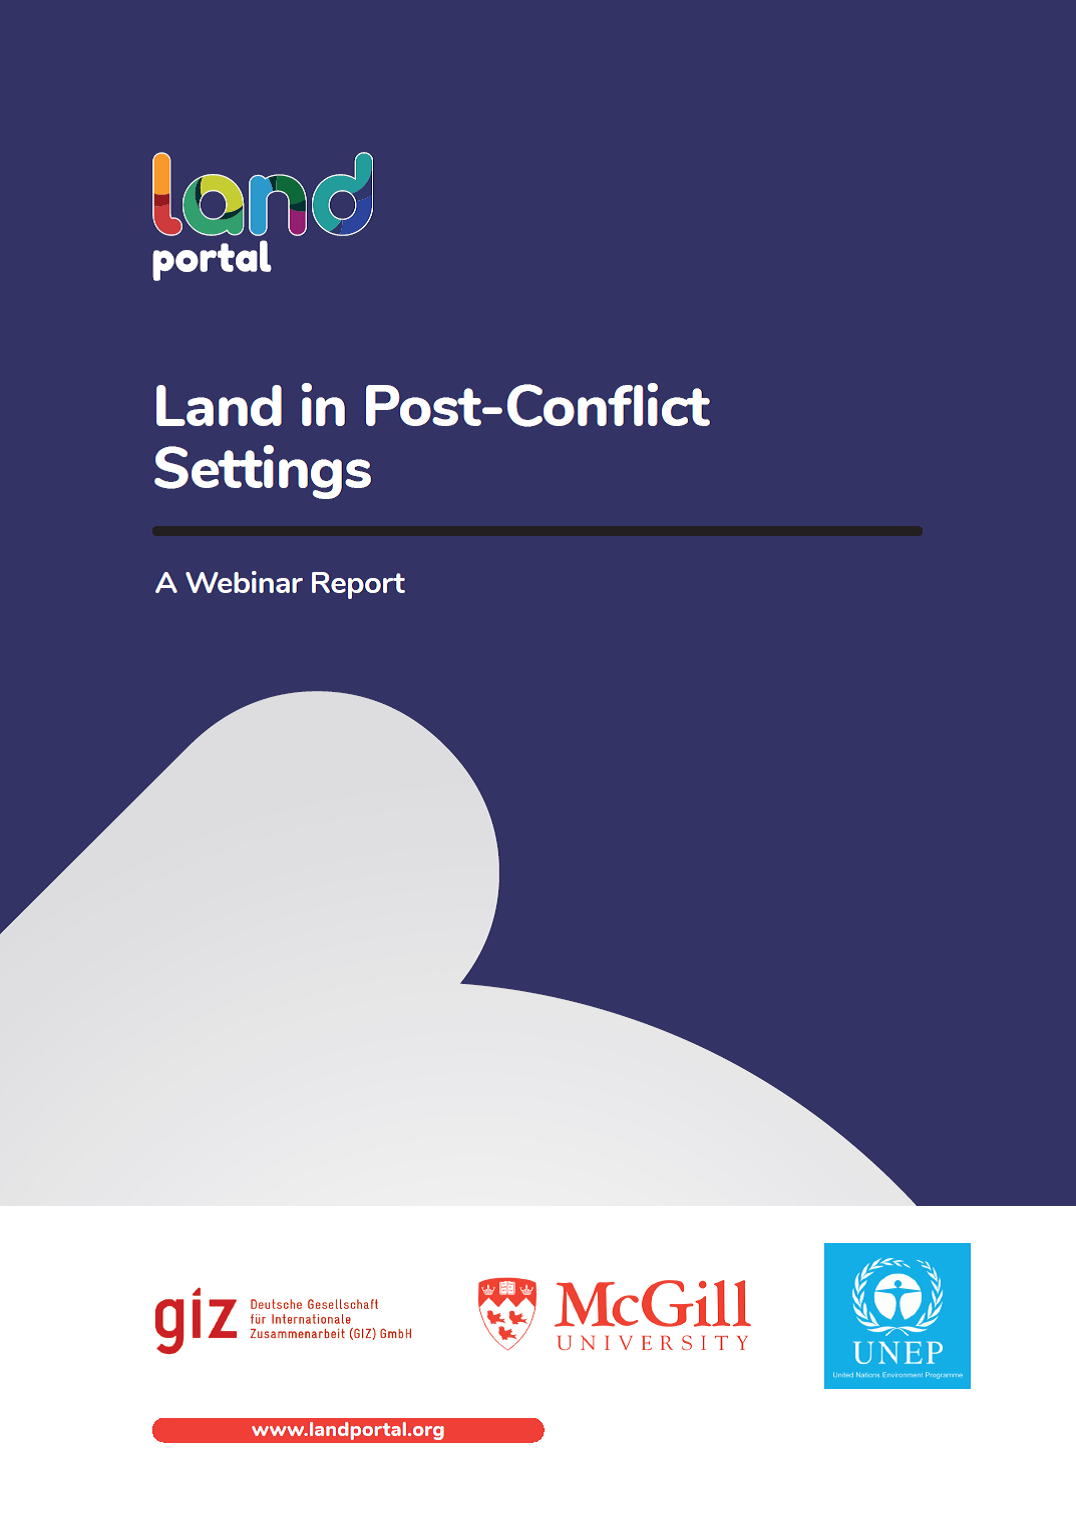 Webinar Report: Land in Post-Conflict Settings